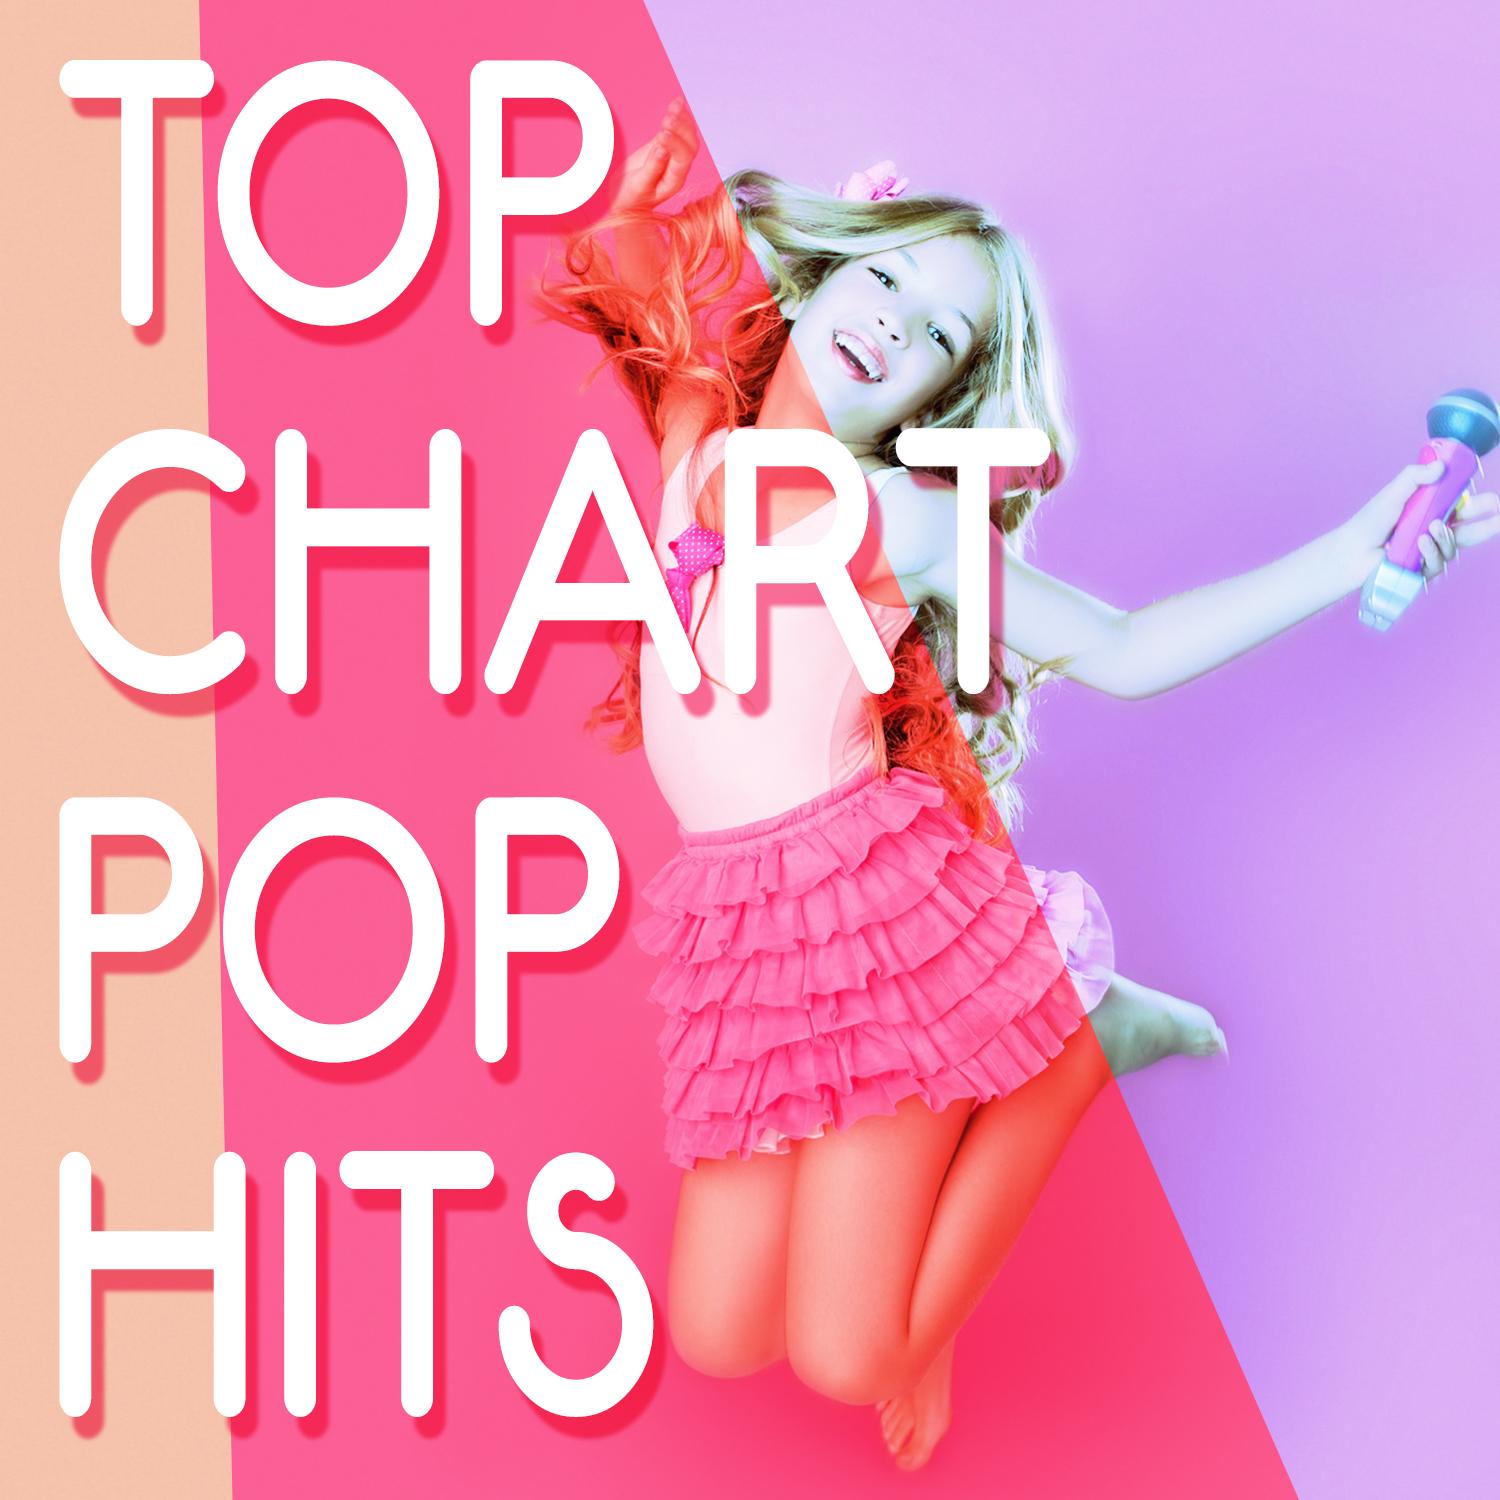 Top Chart Pop Hits